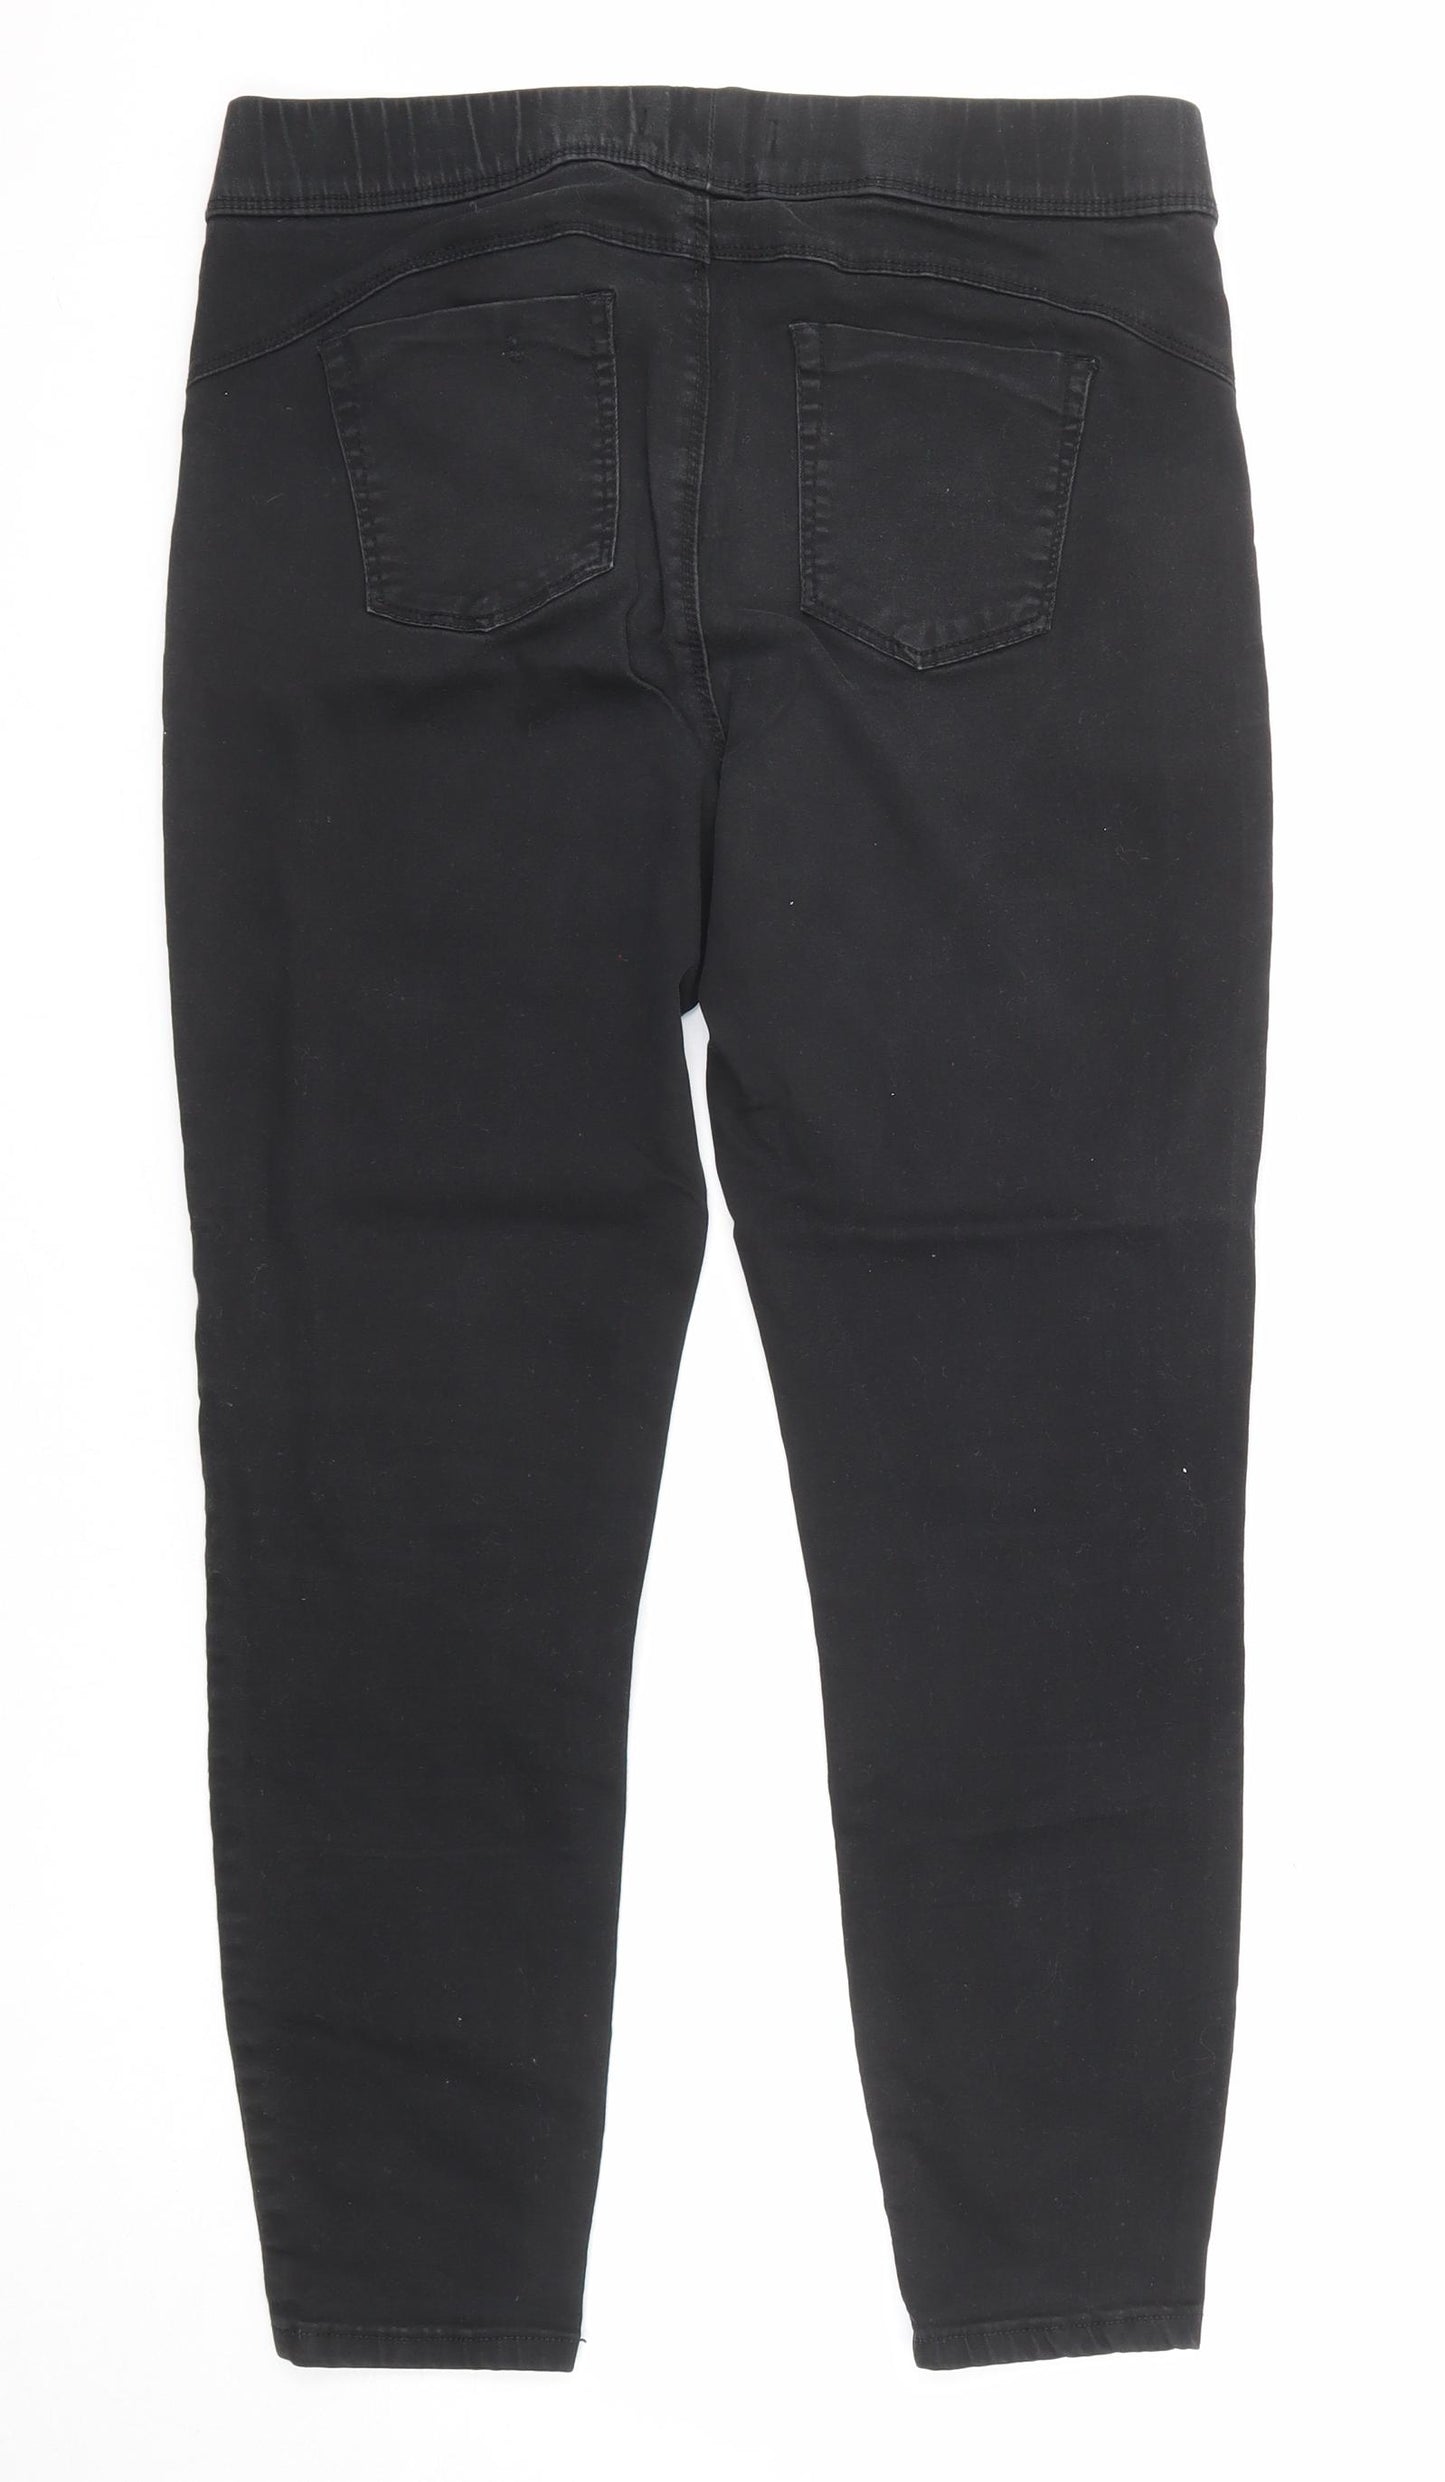 Denim & Co. Womens Black Cotton Jegging Jeans Size 16 Regular